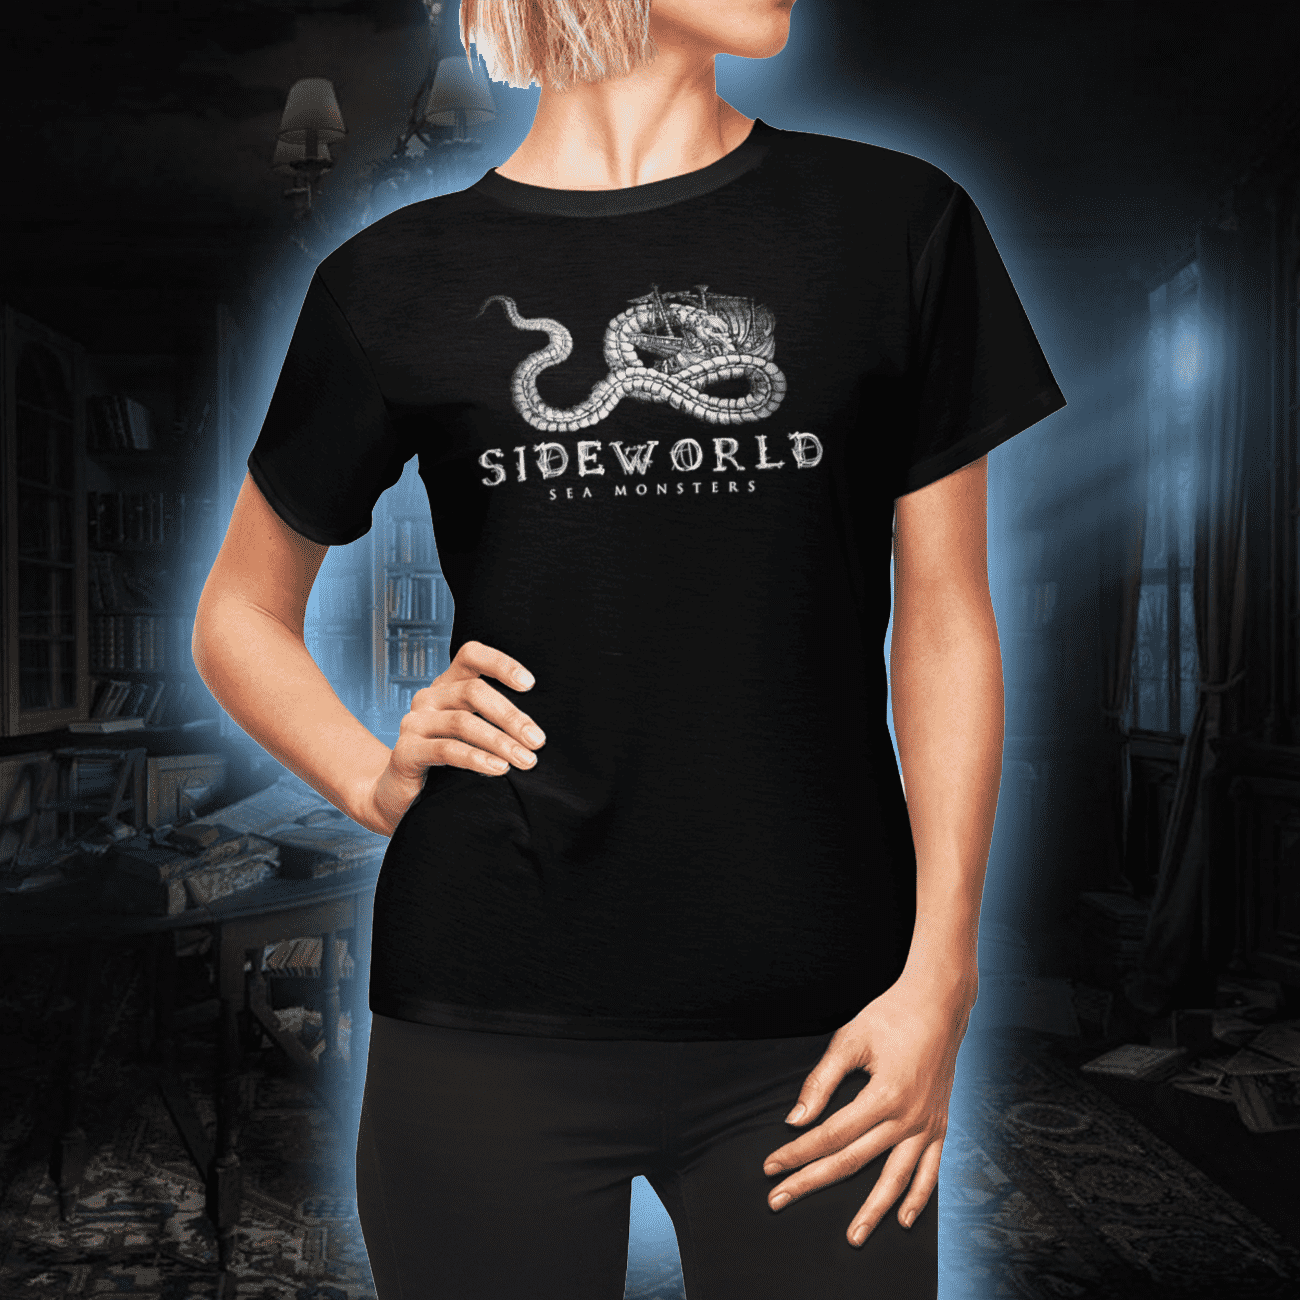 Sea Monsters Serpent Horror T-Shirt - Unisex